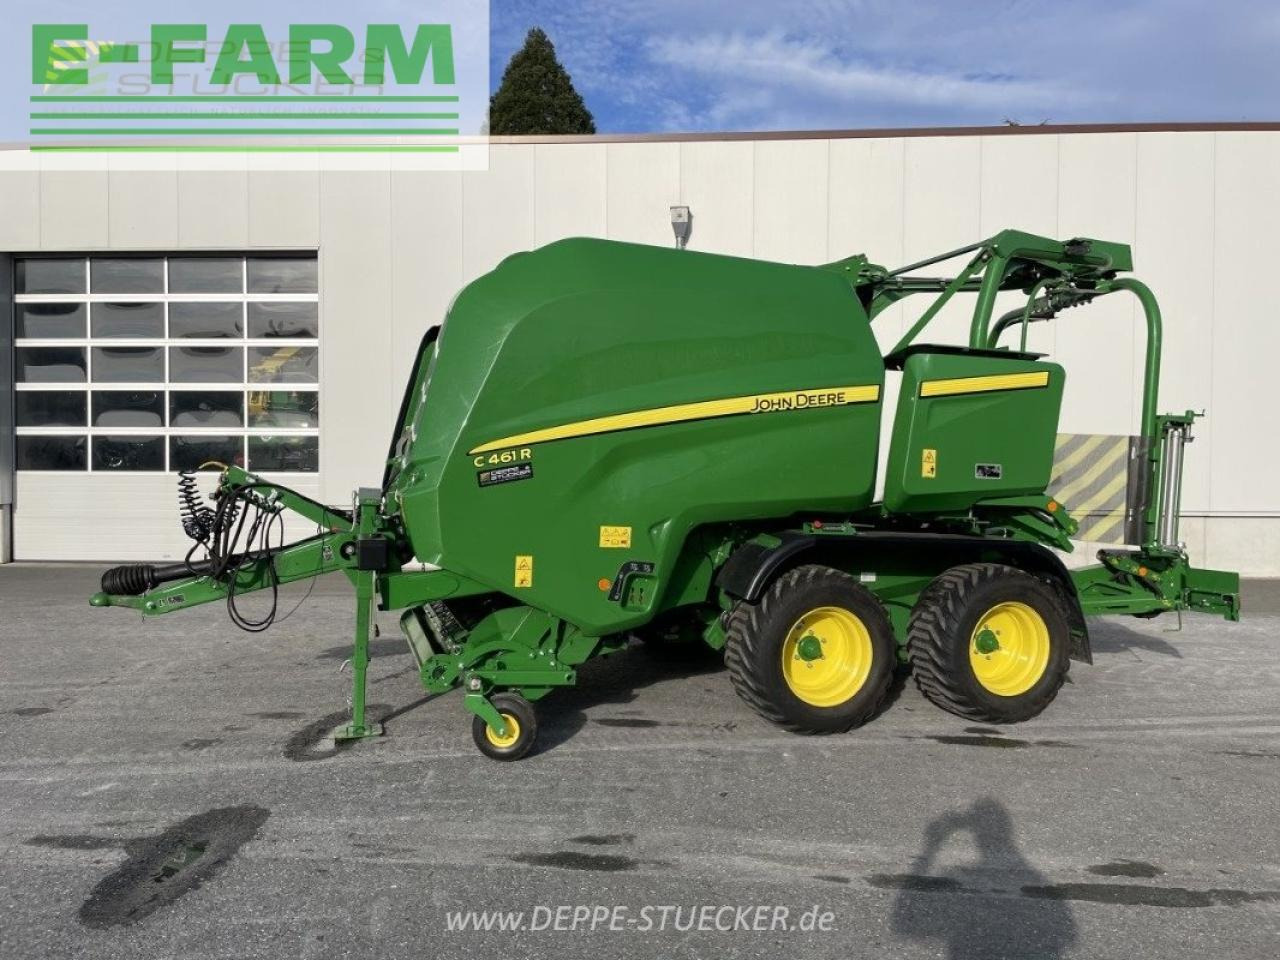 Farm tractor John Deere c461r: picture 7